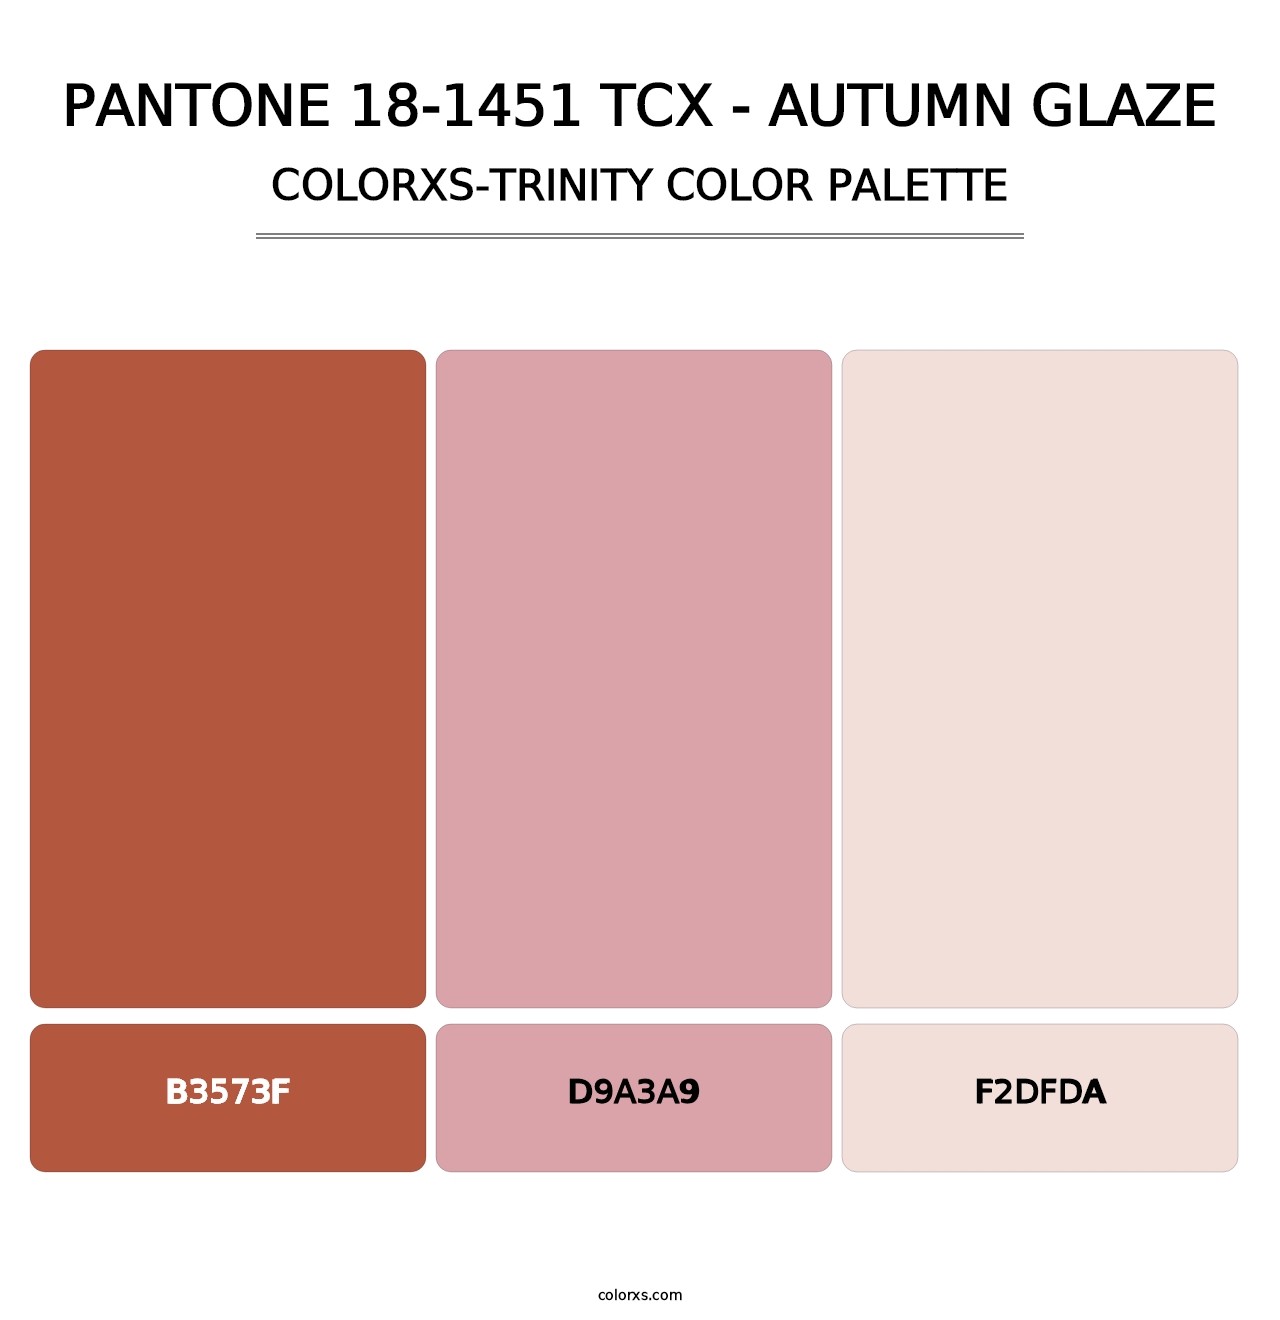 PANTONE 18-1451 TCX - Autumn Glaze - Colorxs Trinity Palette